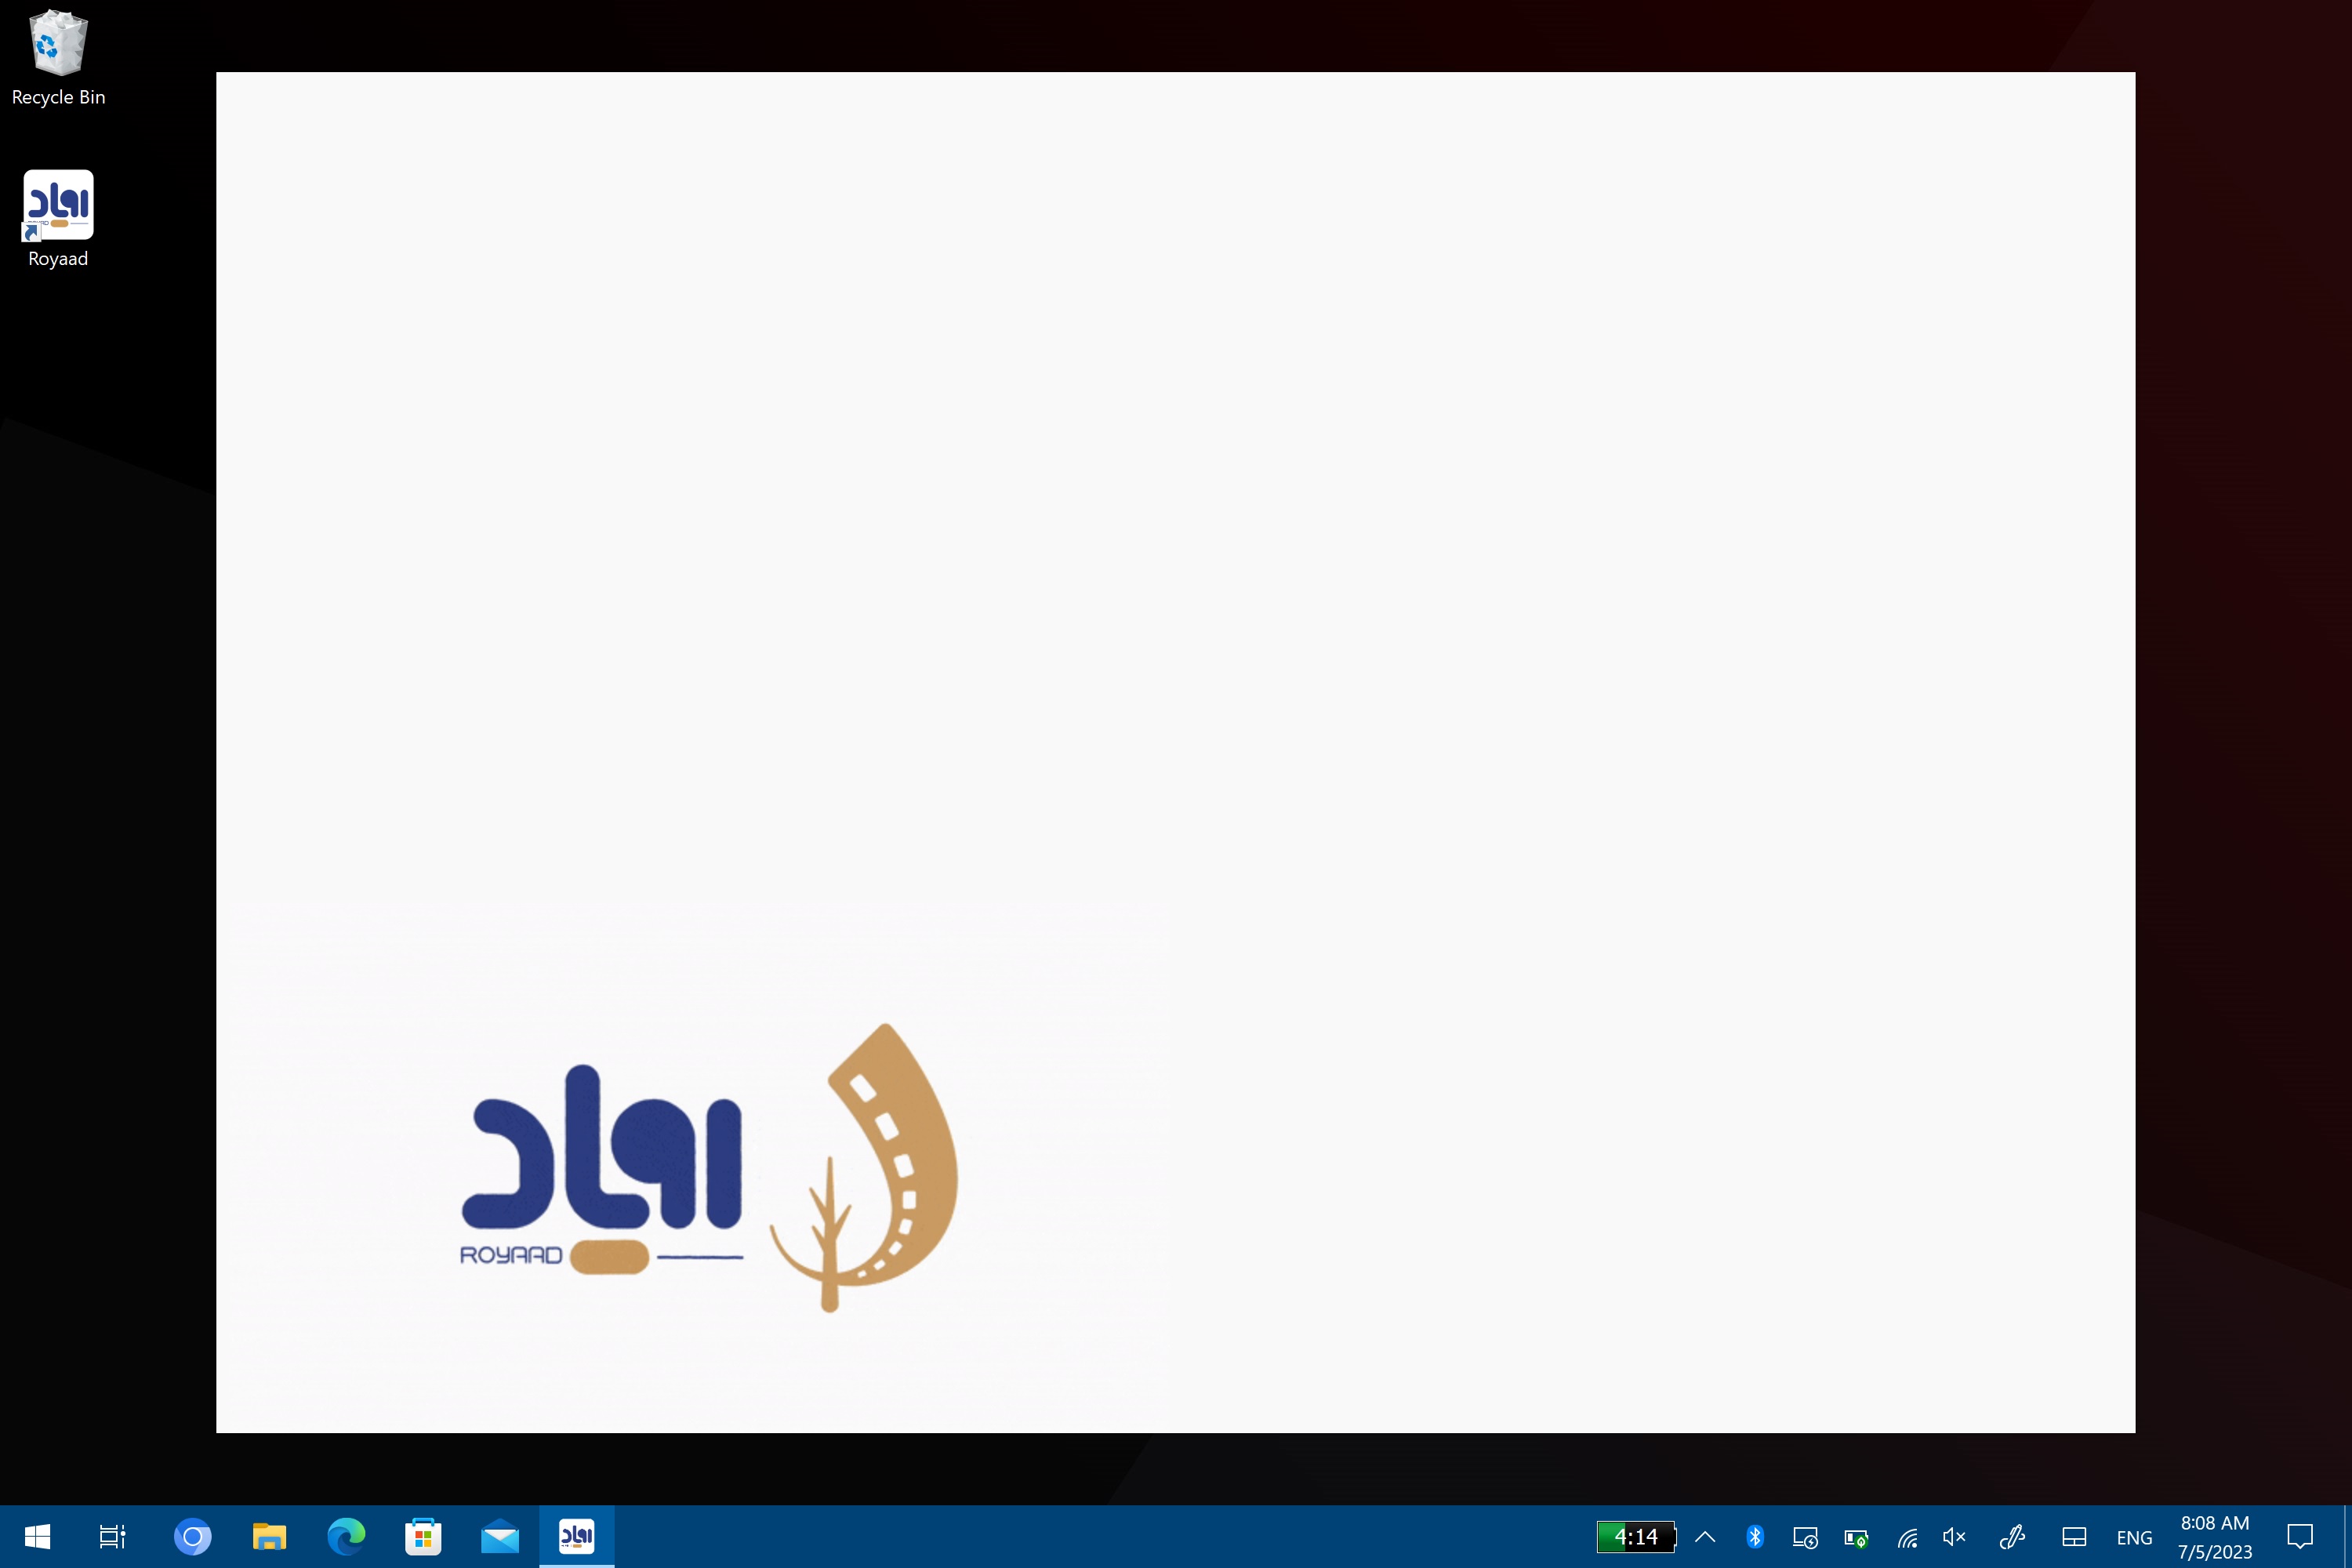 Shahinsoft.ir Royaad desktop application Intro page